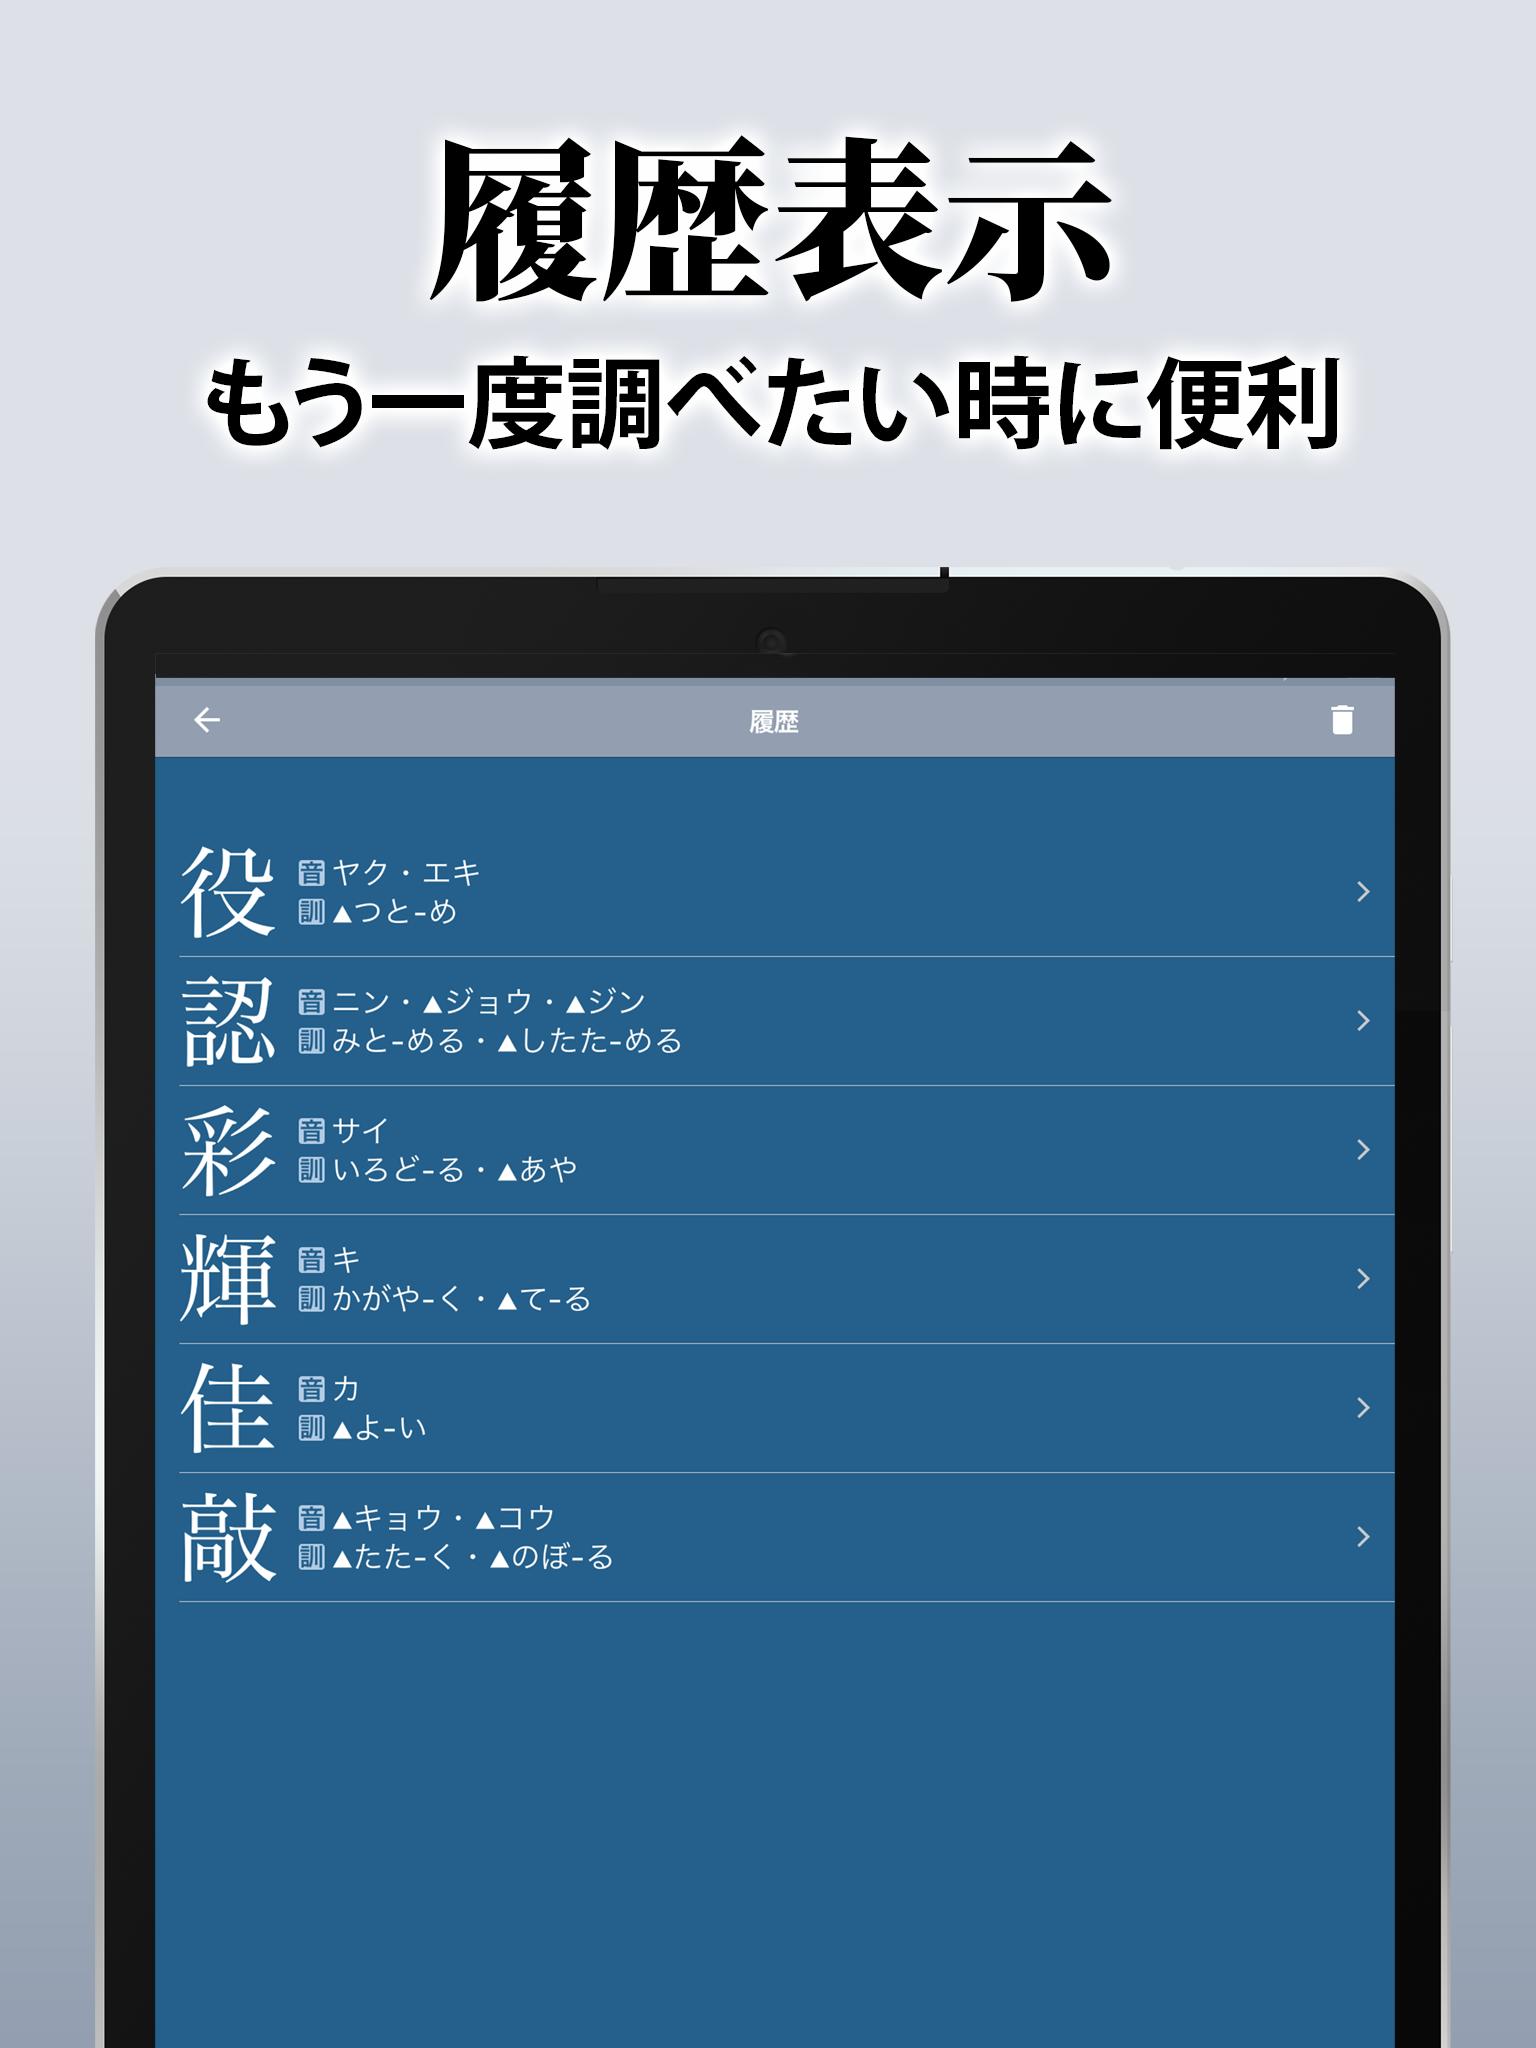 Android 用の 漢字辞典 Apk をダウンロード